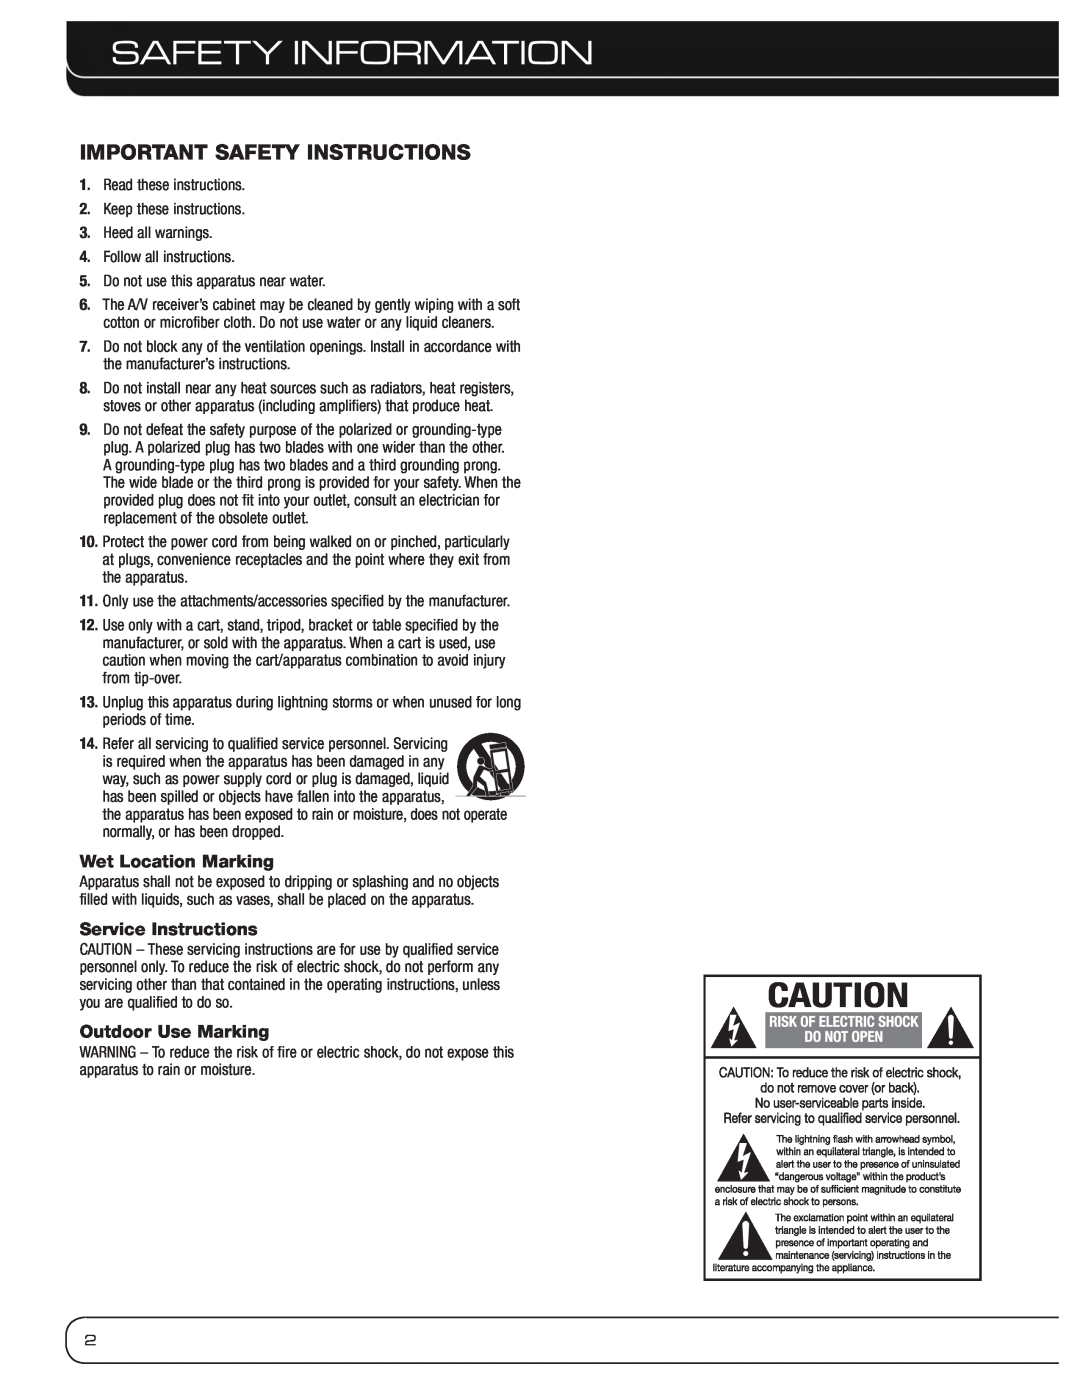 Harman-Kardon AVR 3600 owner manual Safety Information, Important Safety Instructions 